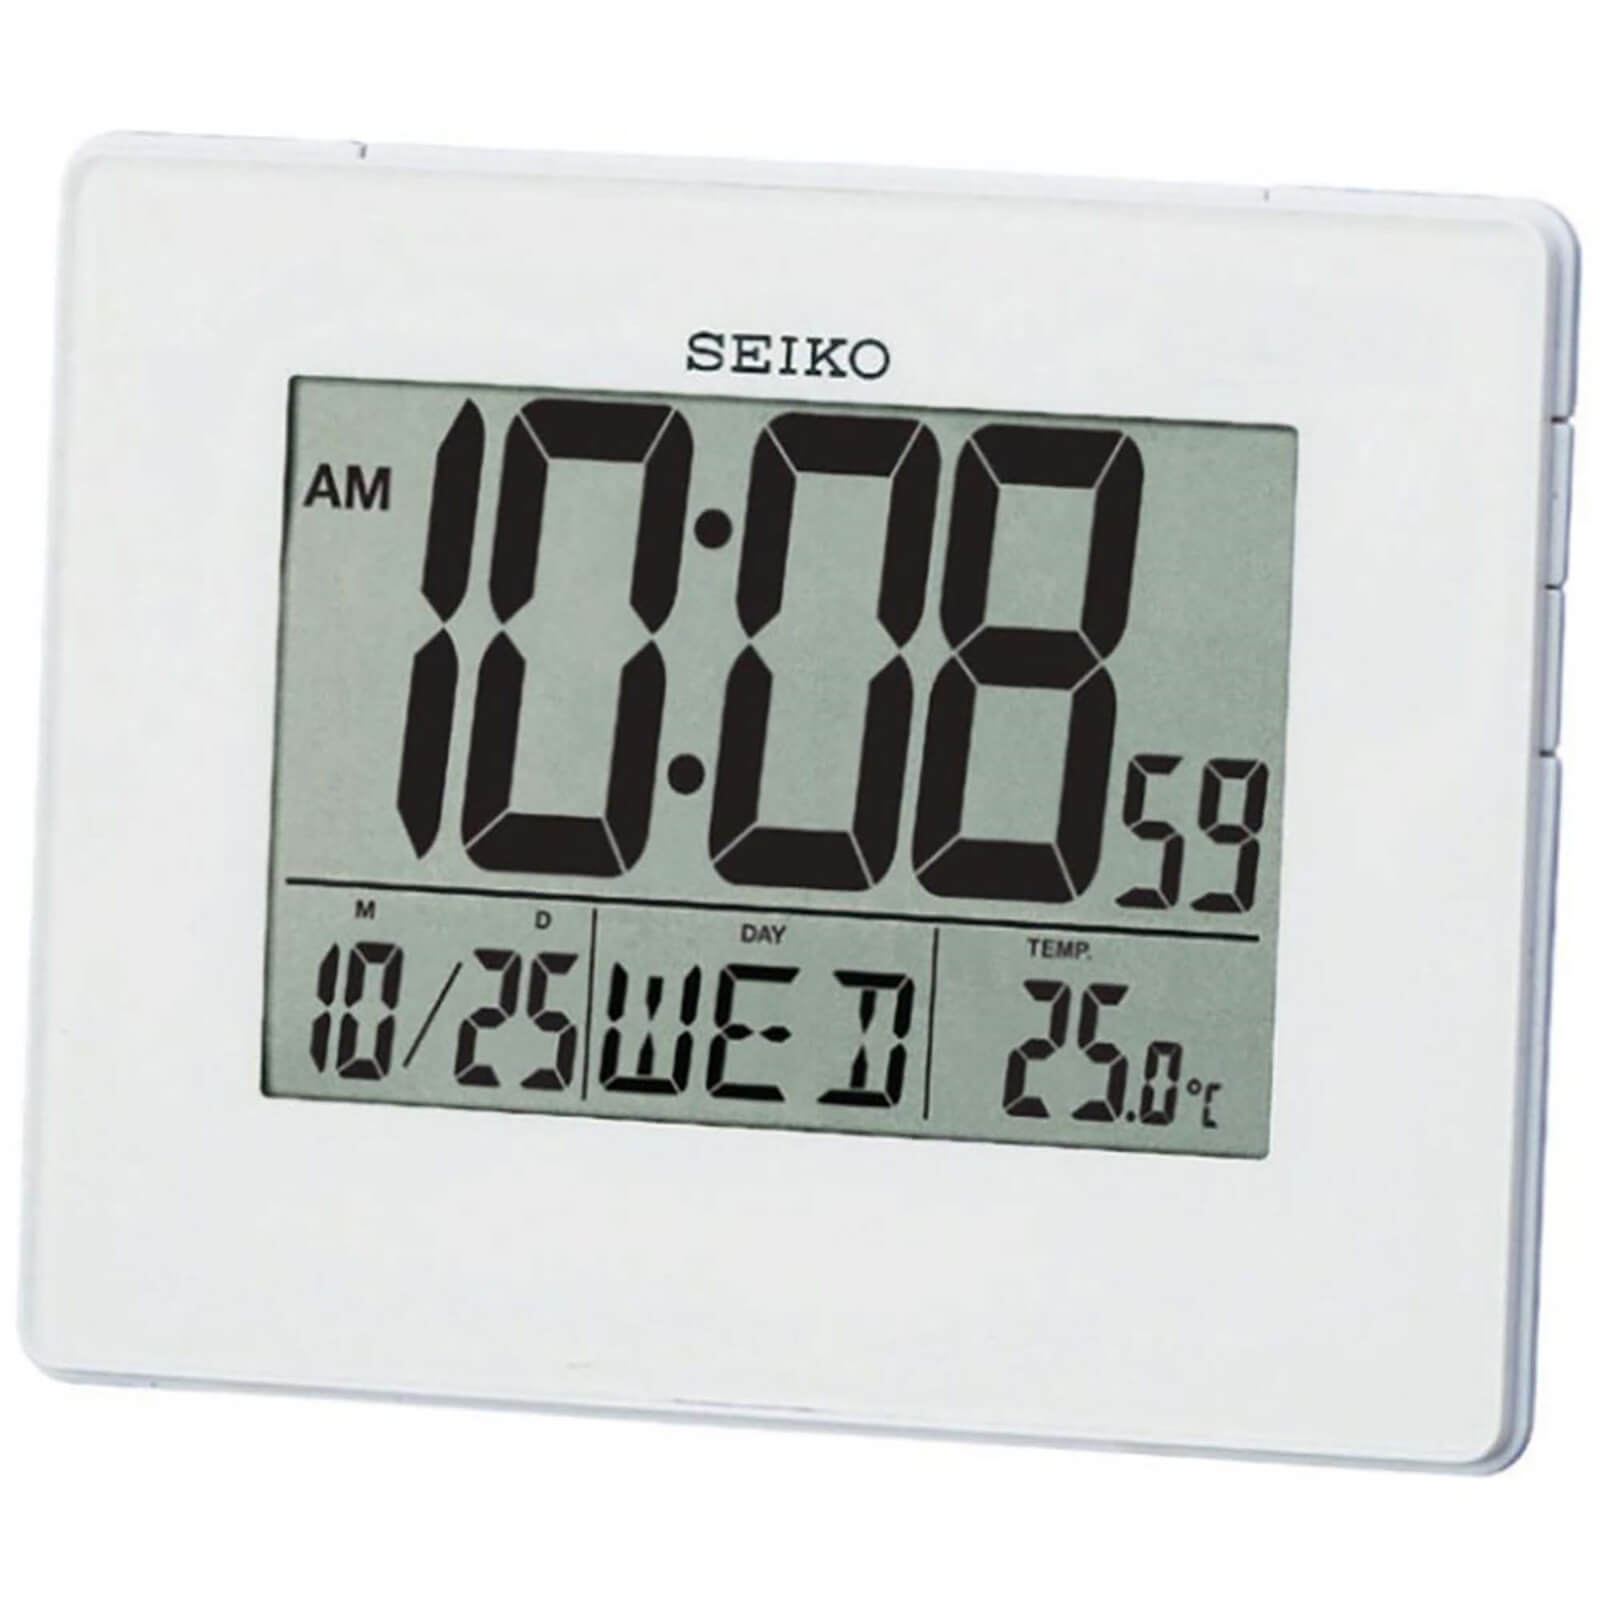 Seiko Lcd Alarm Calendar Clock - White